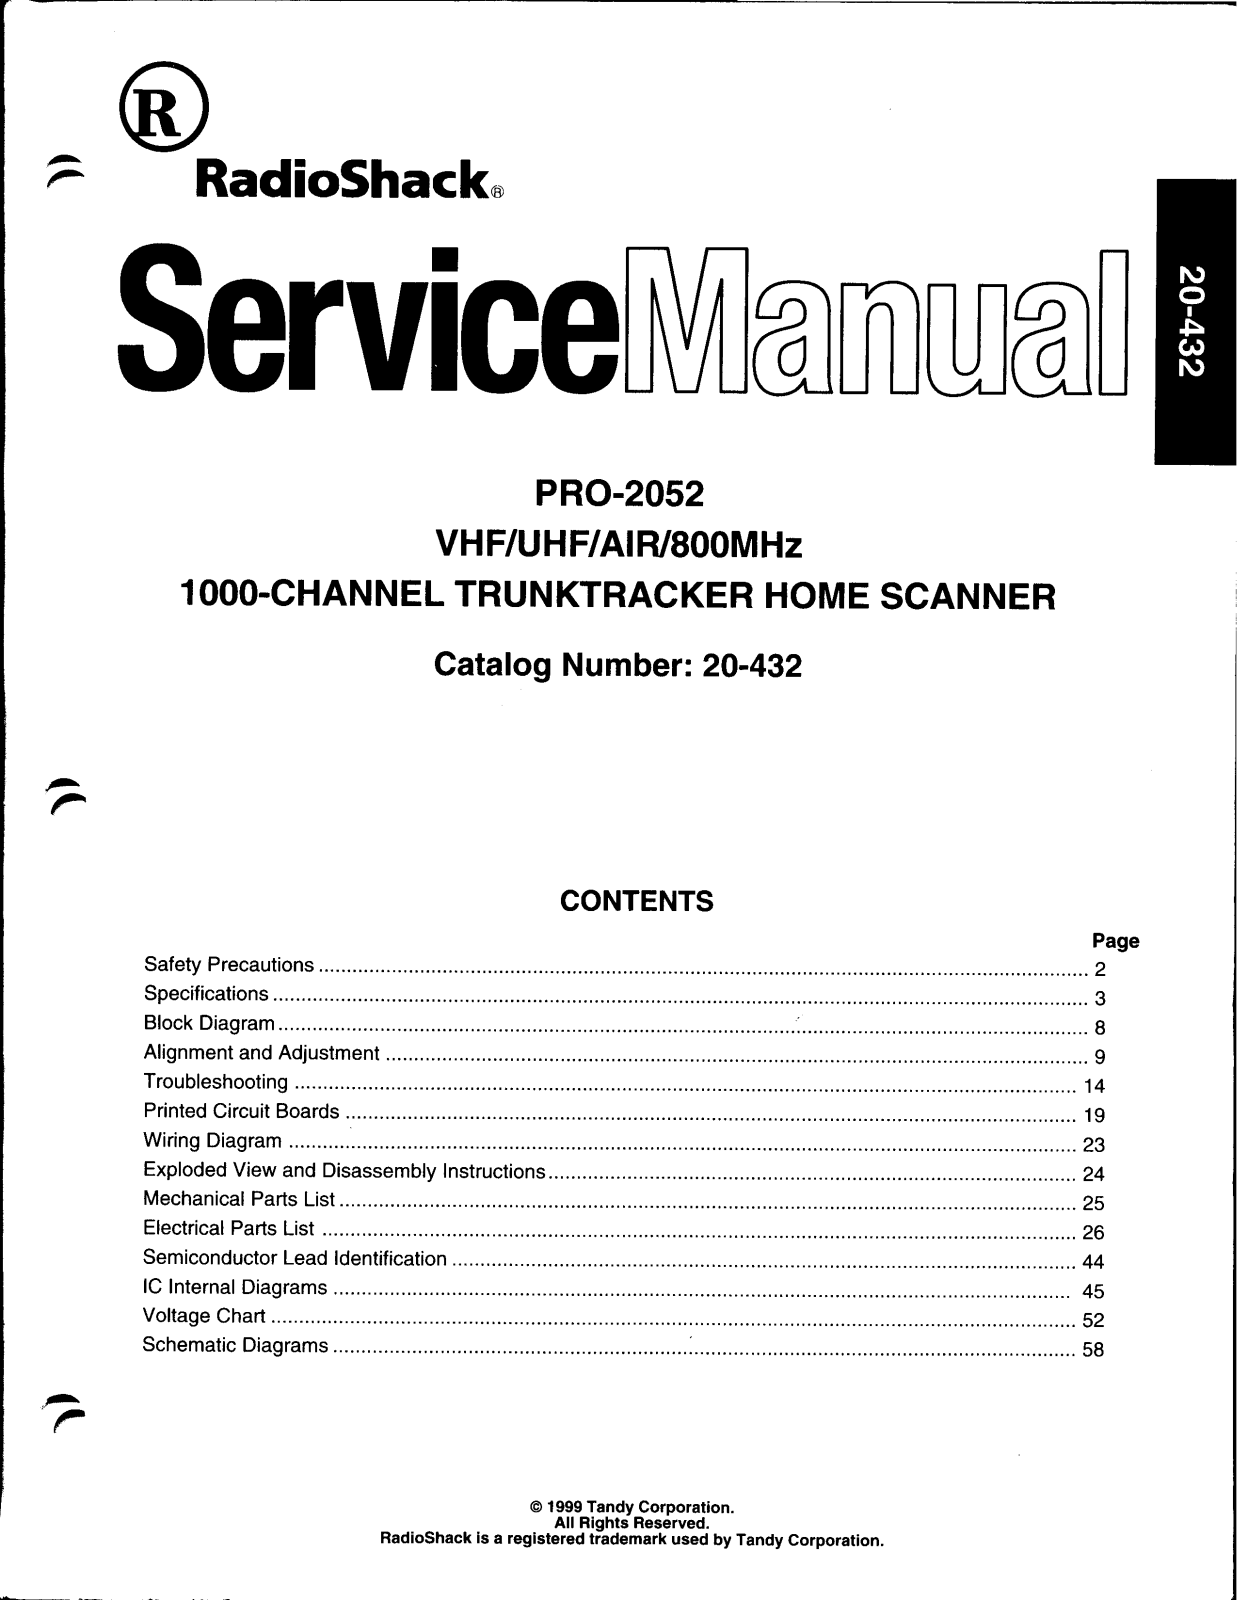 RadioShack PRO-2052 Service Manual